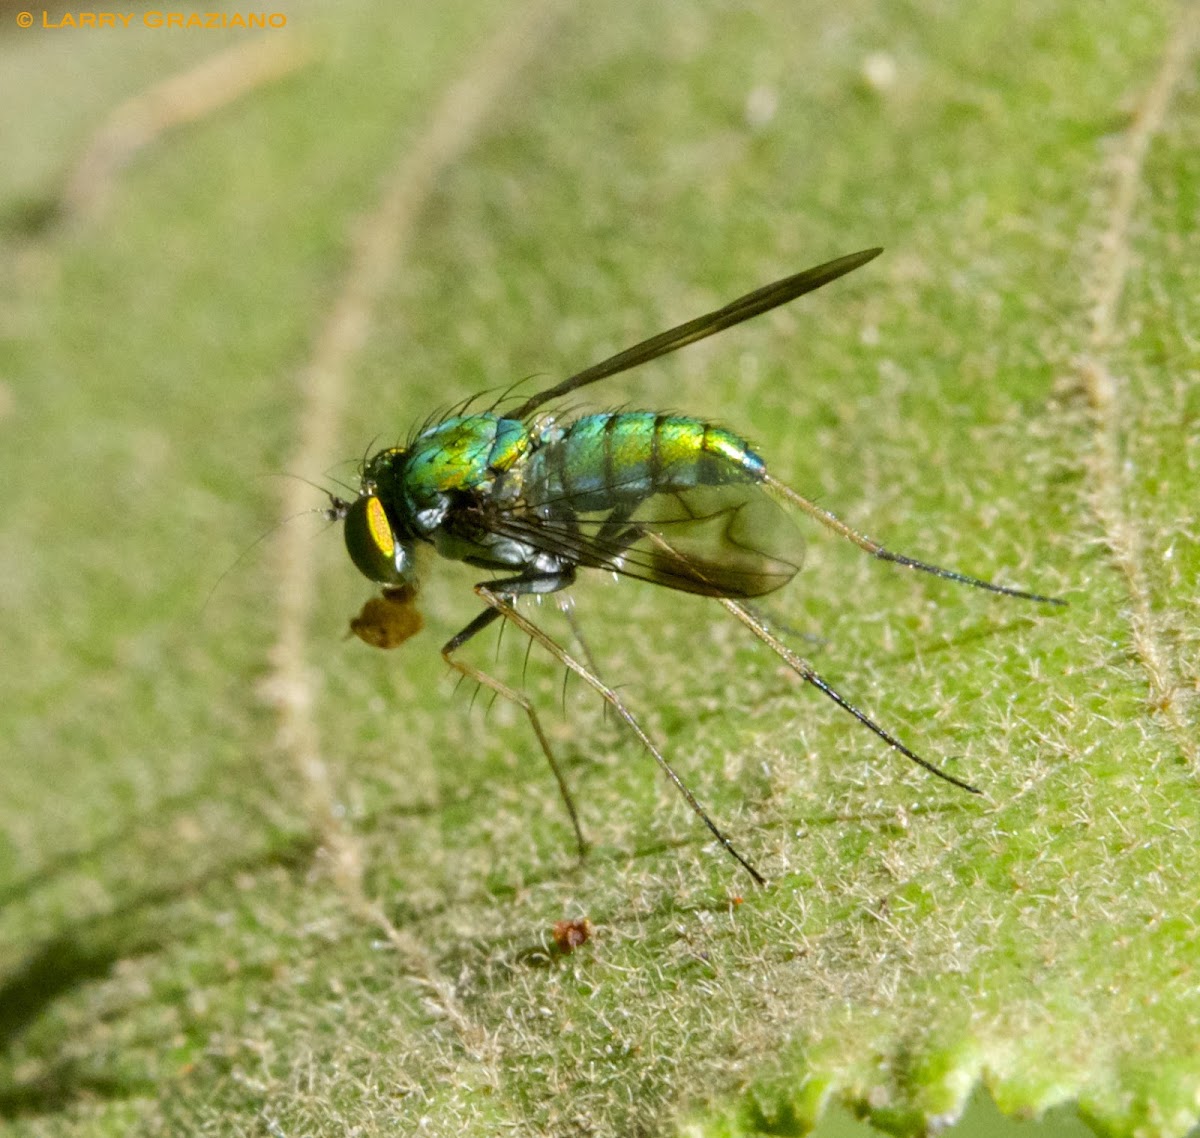 Long-Legged Fly with prey